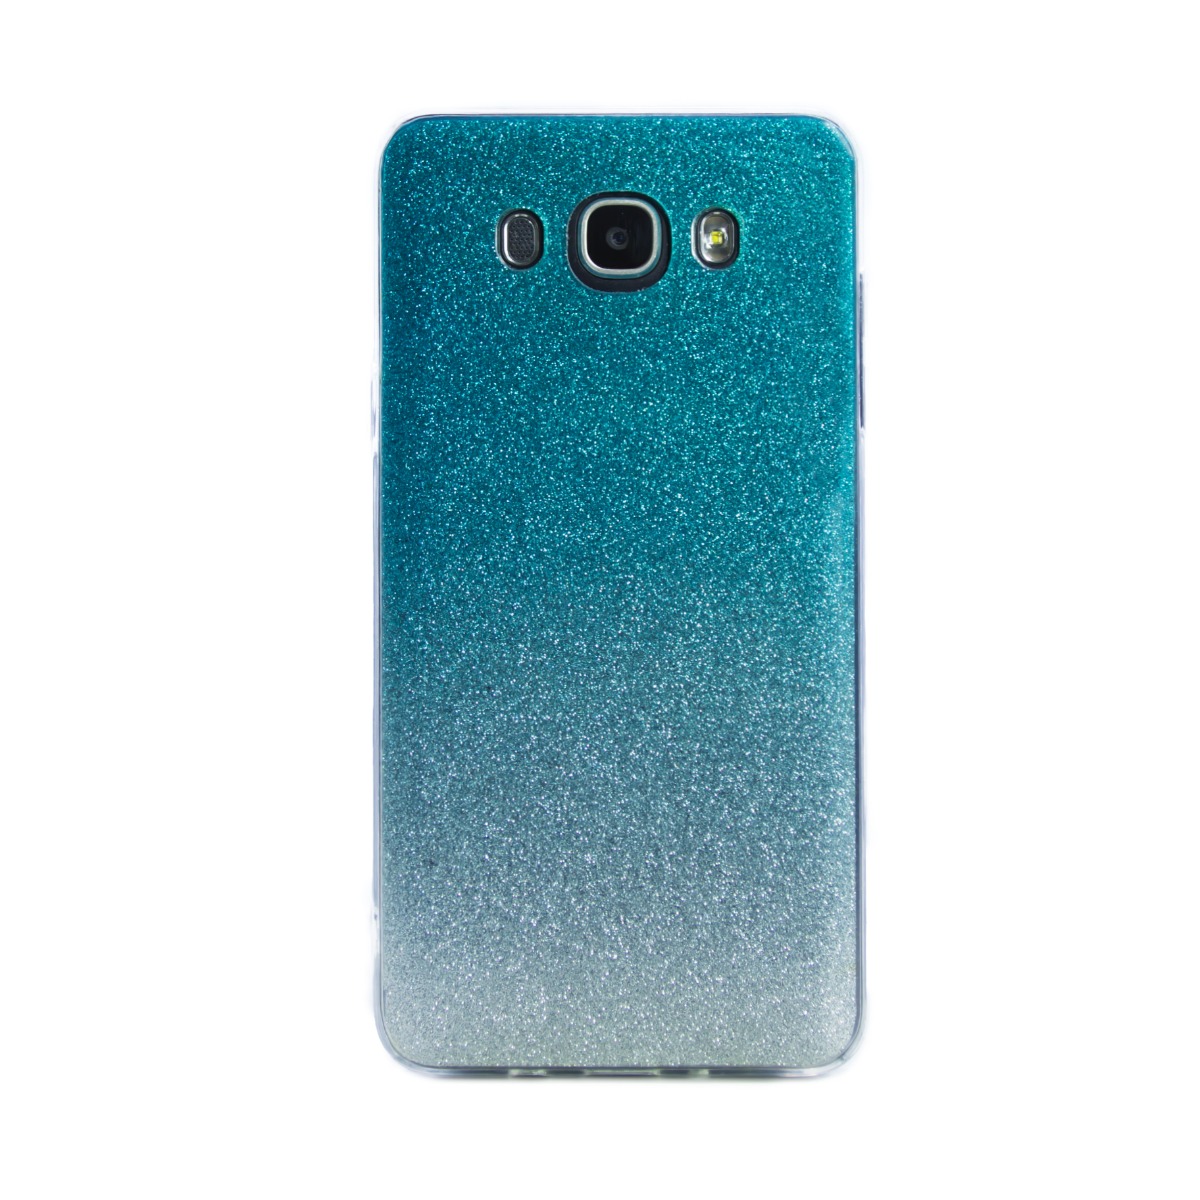 Carcasa fashion Samsung Galaxy J7 2016, Contakt Glitter Argintiu thumb